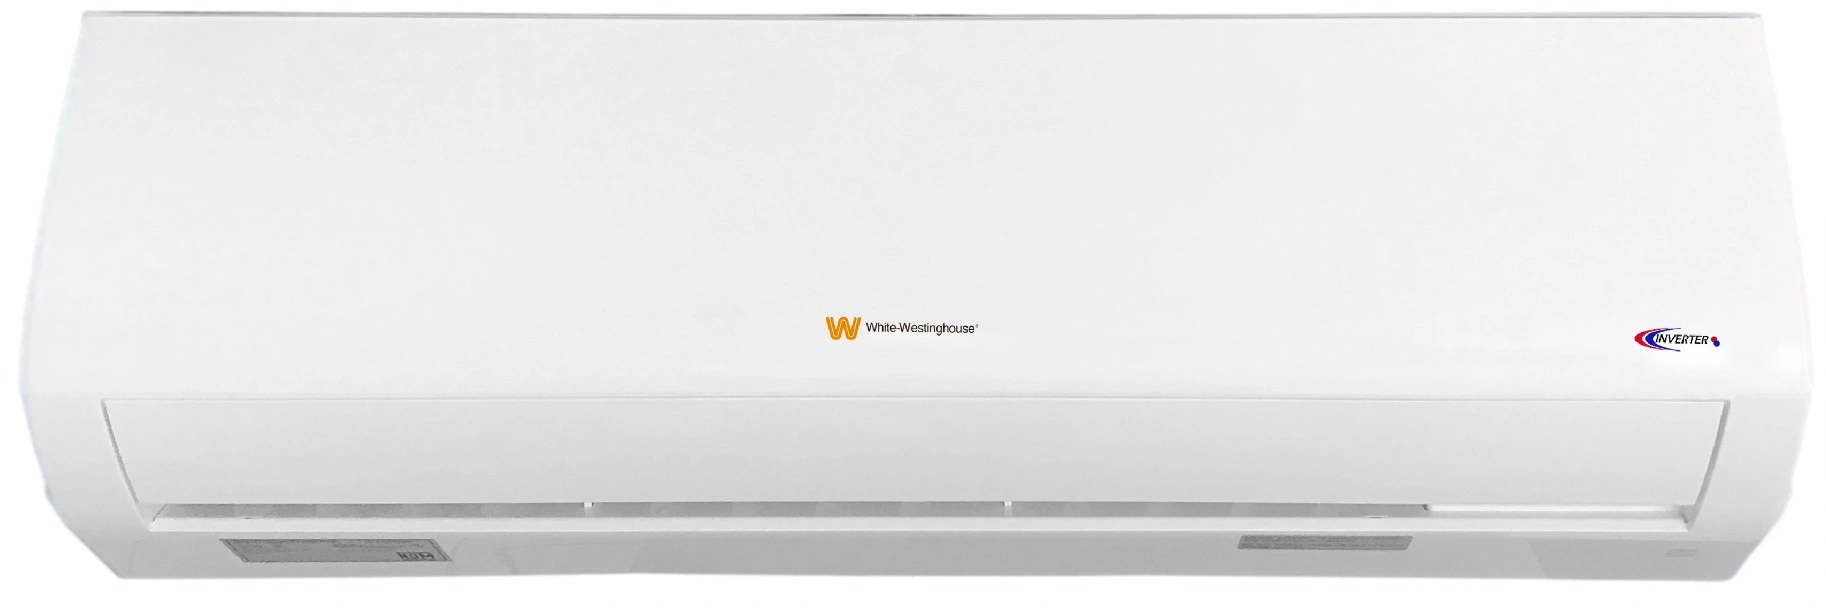 Minisplit White Westinghouse Inverter 12Kbtu 110V